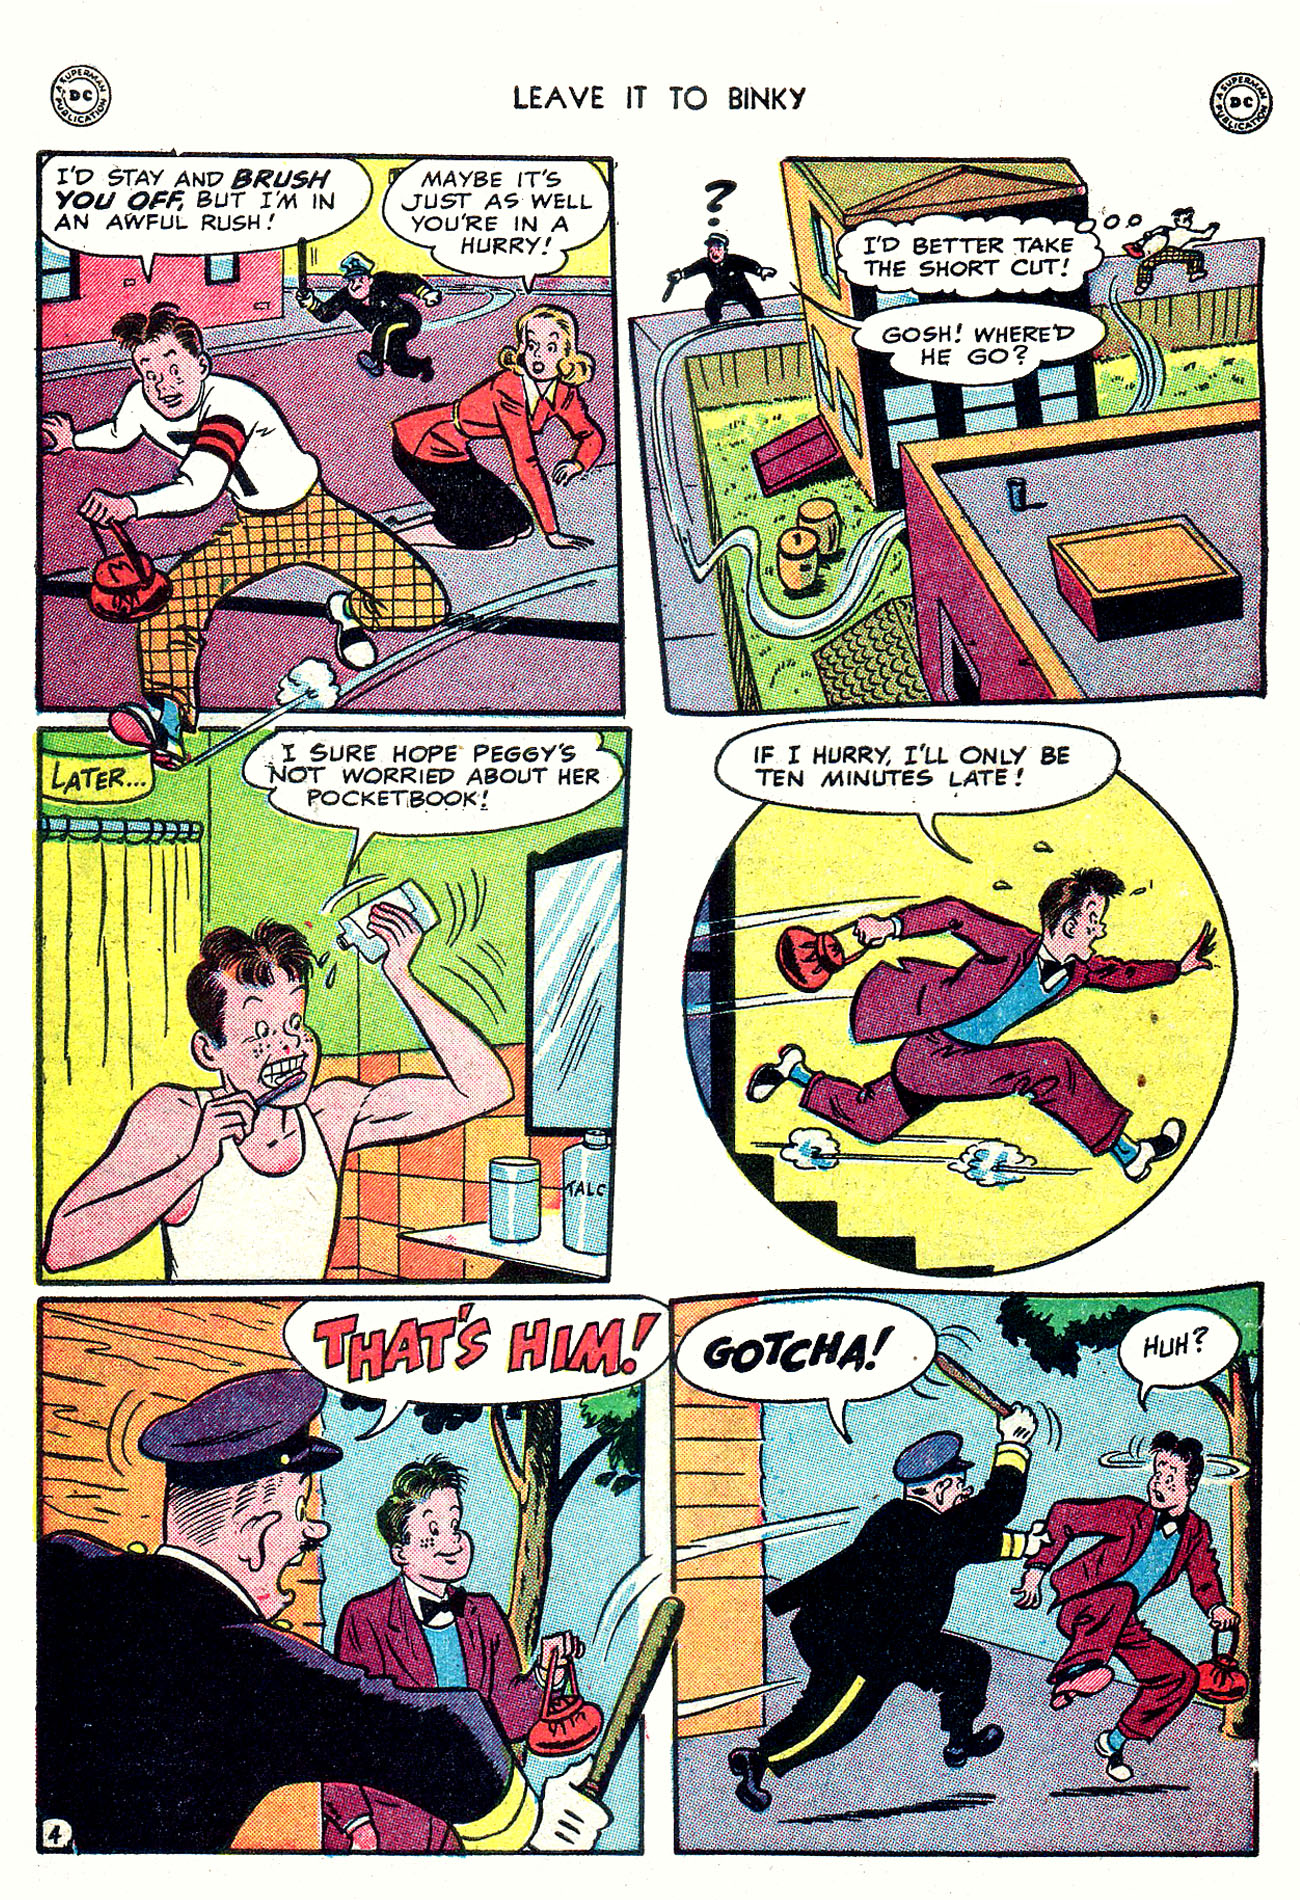 Read online Leave it to Binky comic -  Issue #6 - 6